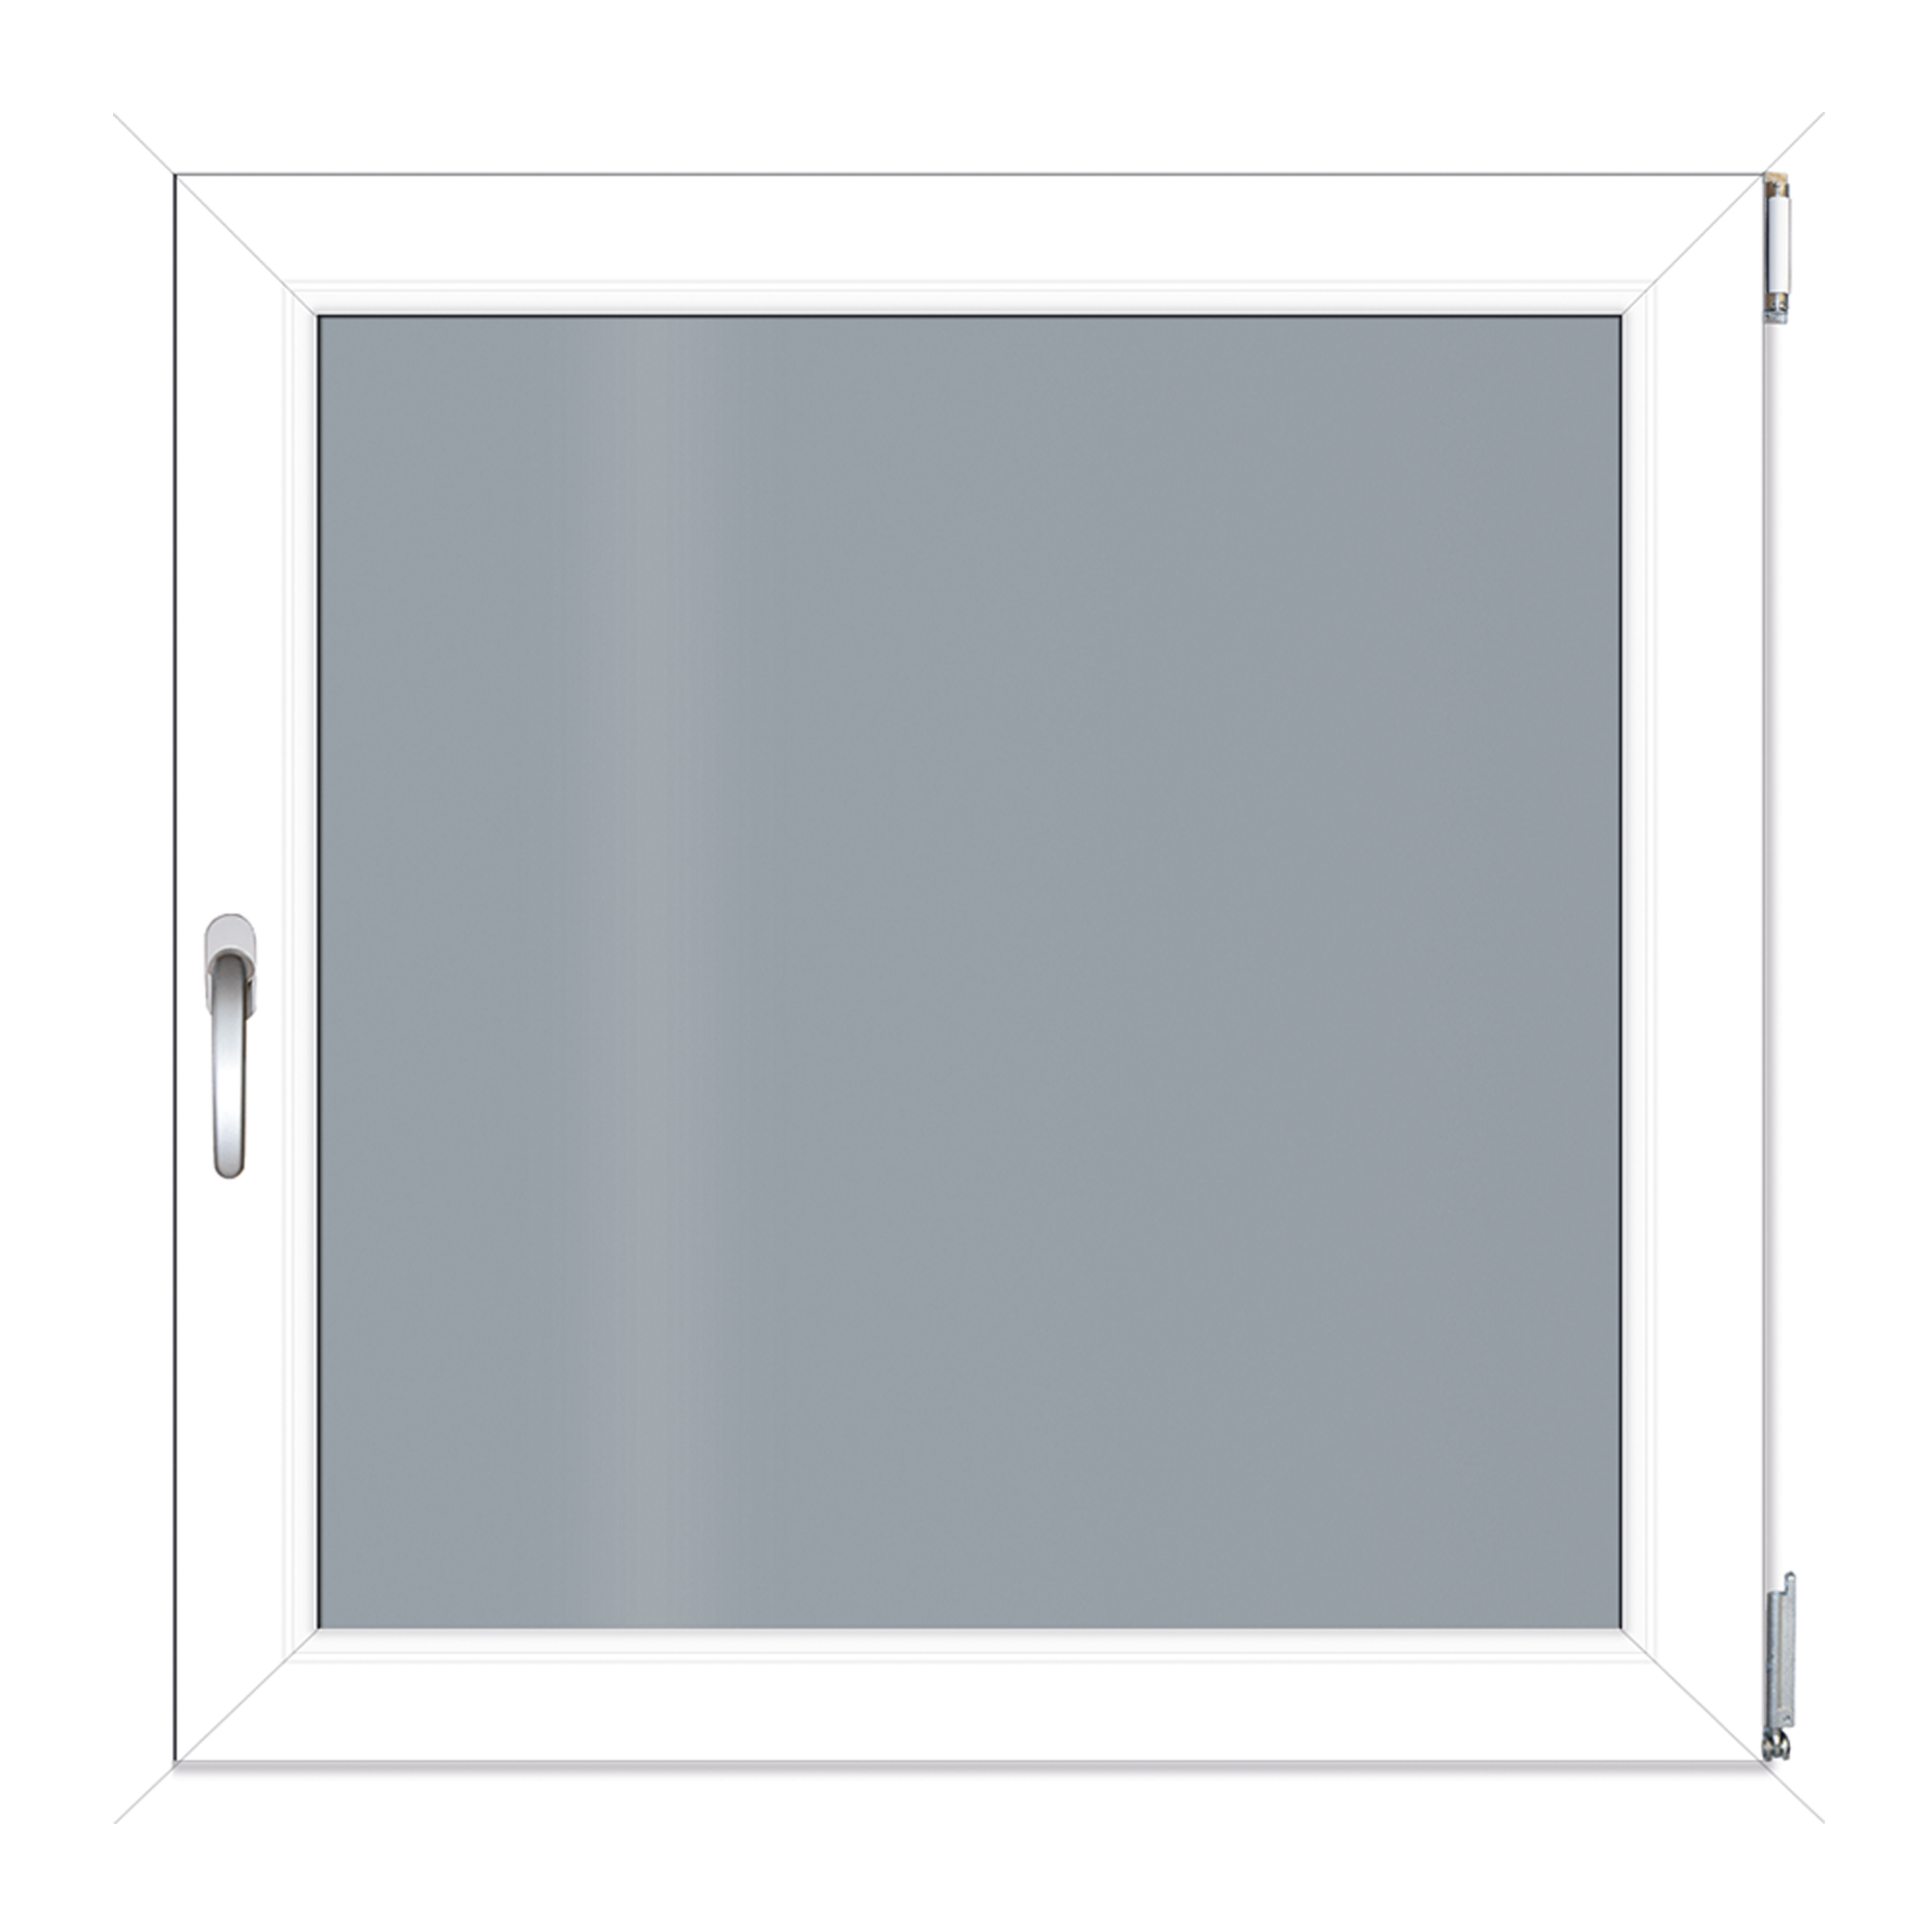 Kunststofffenster 750 x 750 mm weiß DIN rechts + product picture